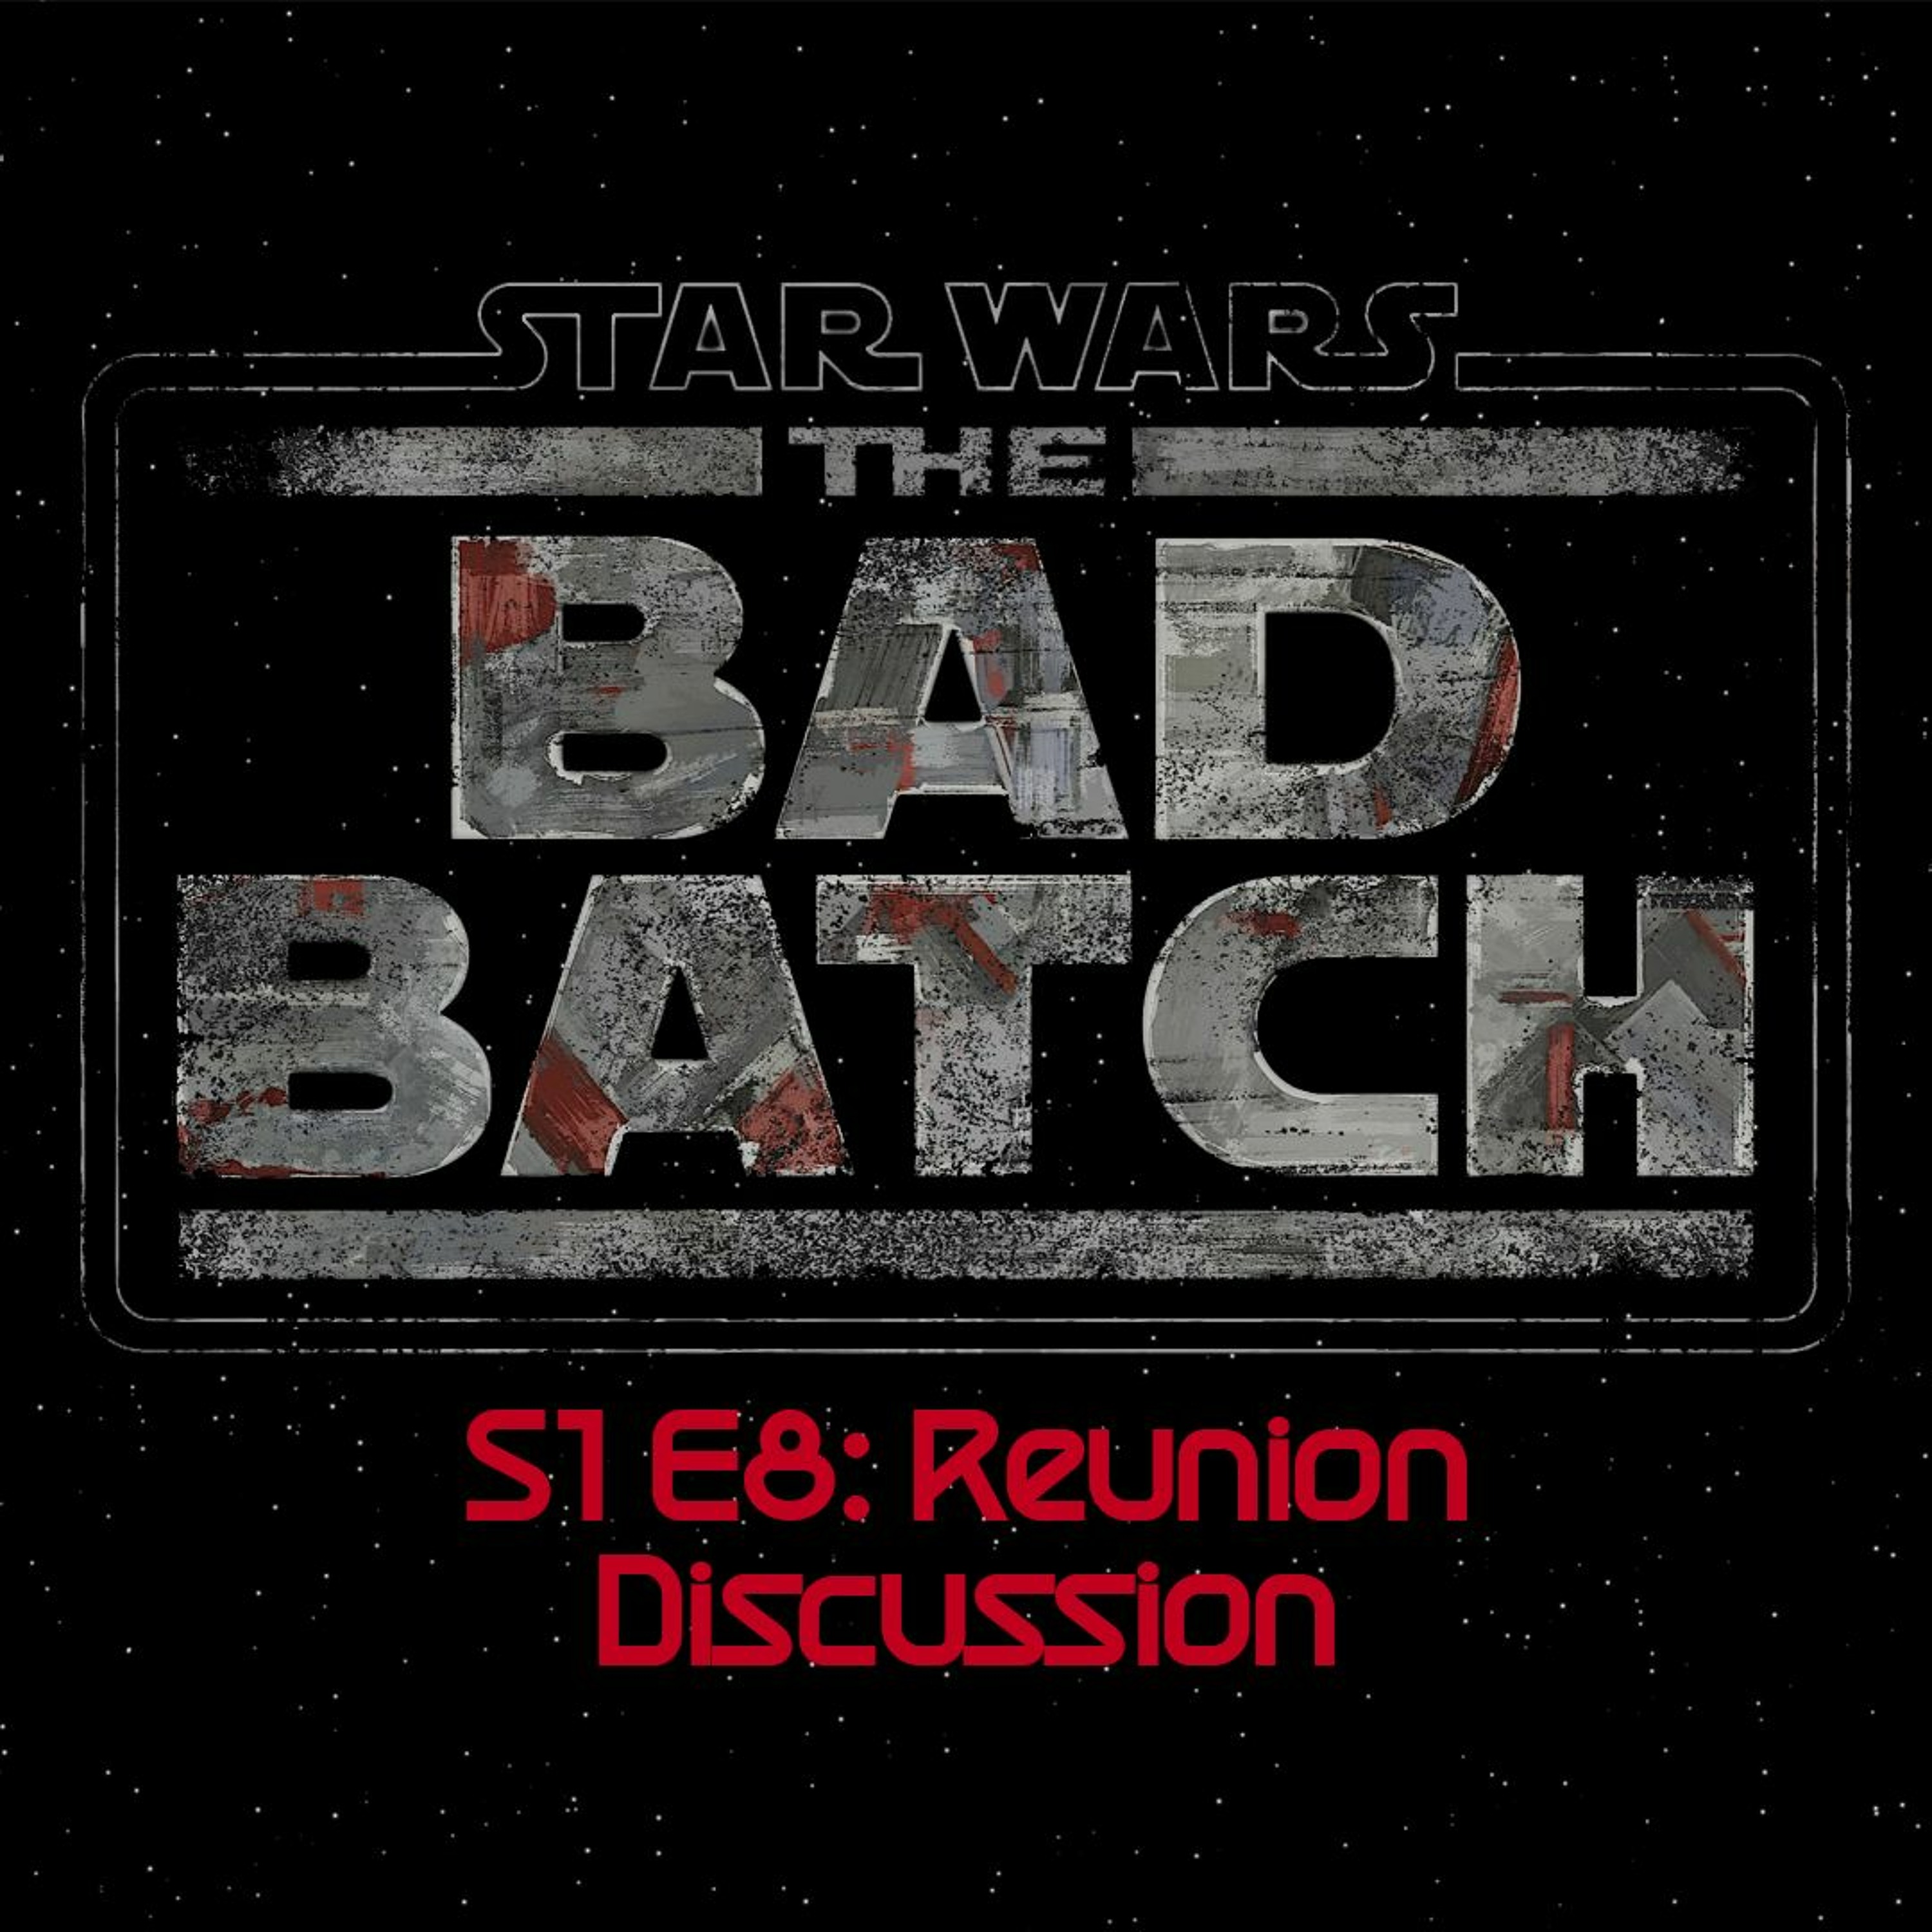 The Bad Batch S1E8: Reunion